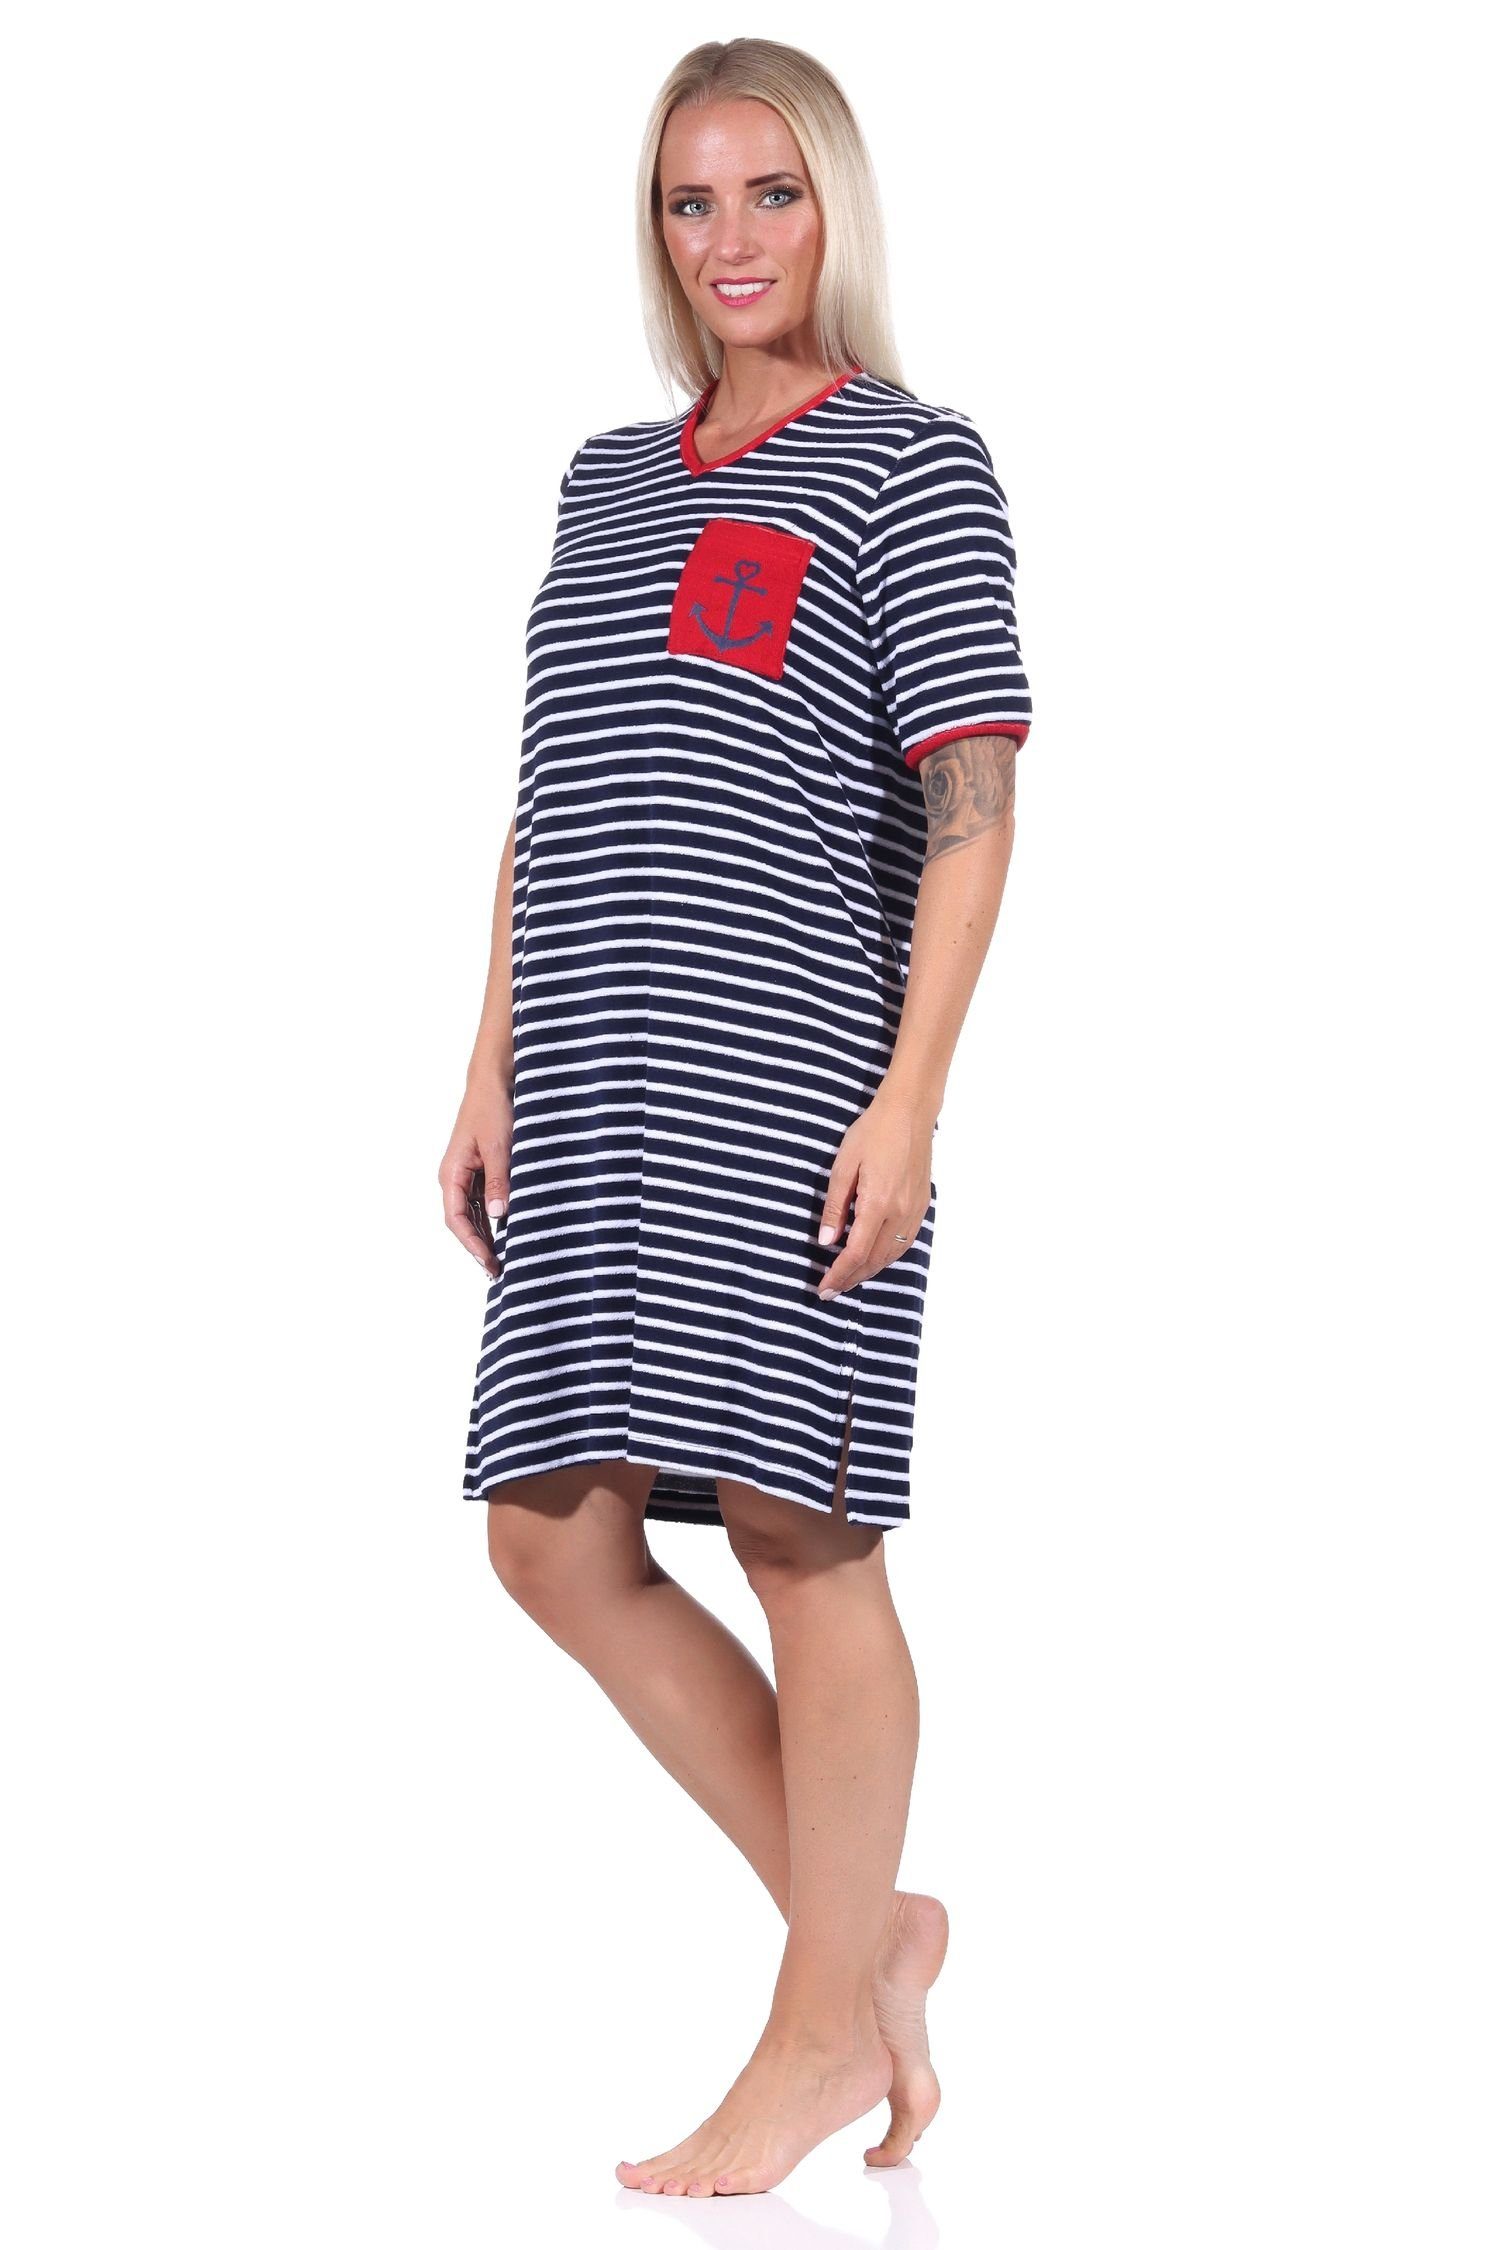 Normann Nachthemd Maritimes kurzarm Frottee Motiv mit Damen Strandkleid Nachthemd Anker marine